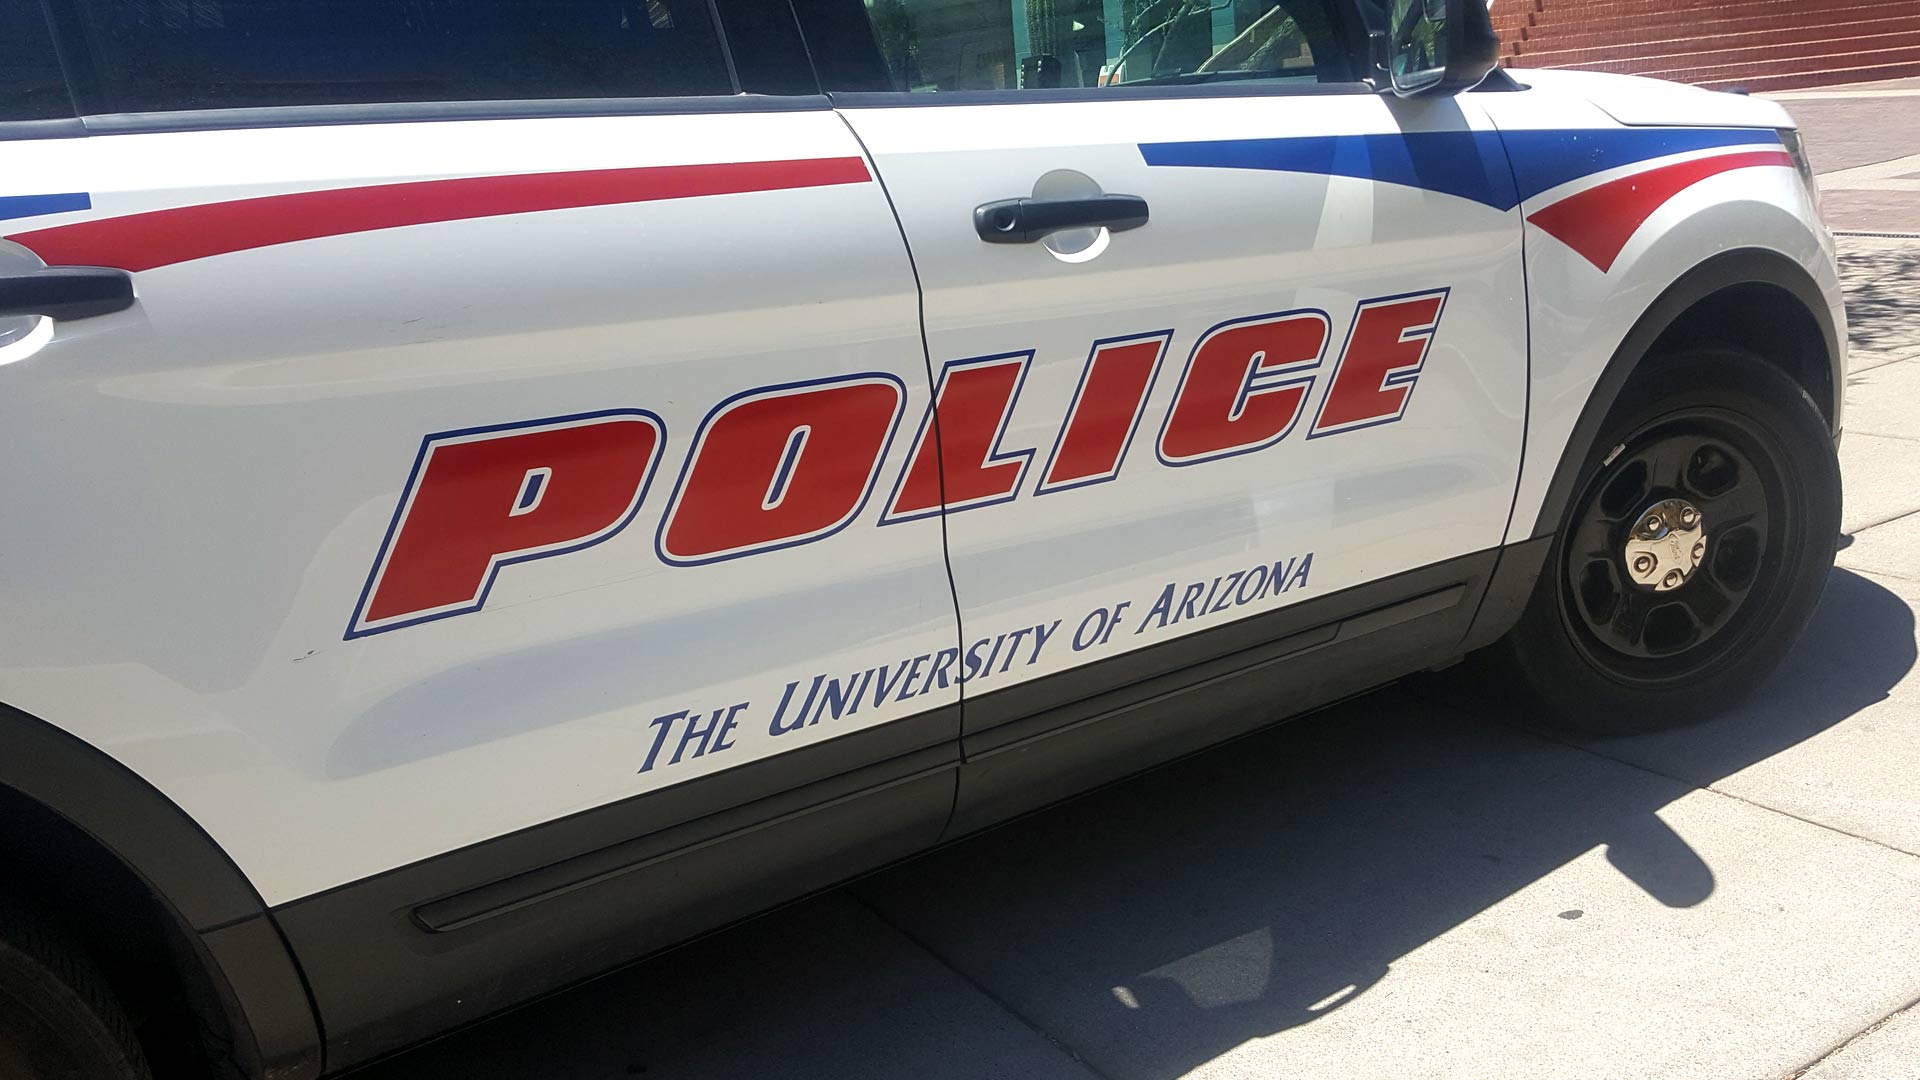 UAPD, University of Arizona Police truck hero